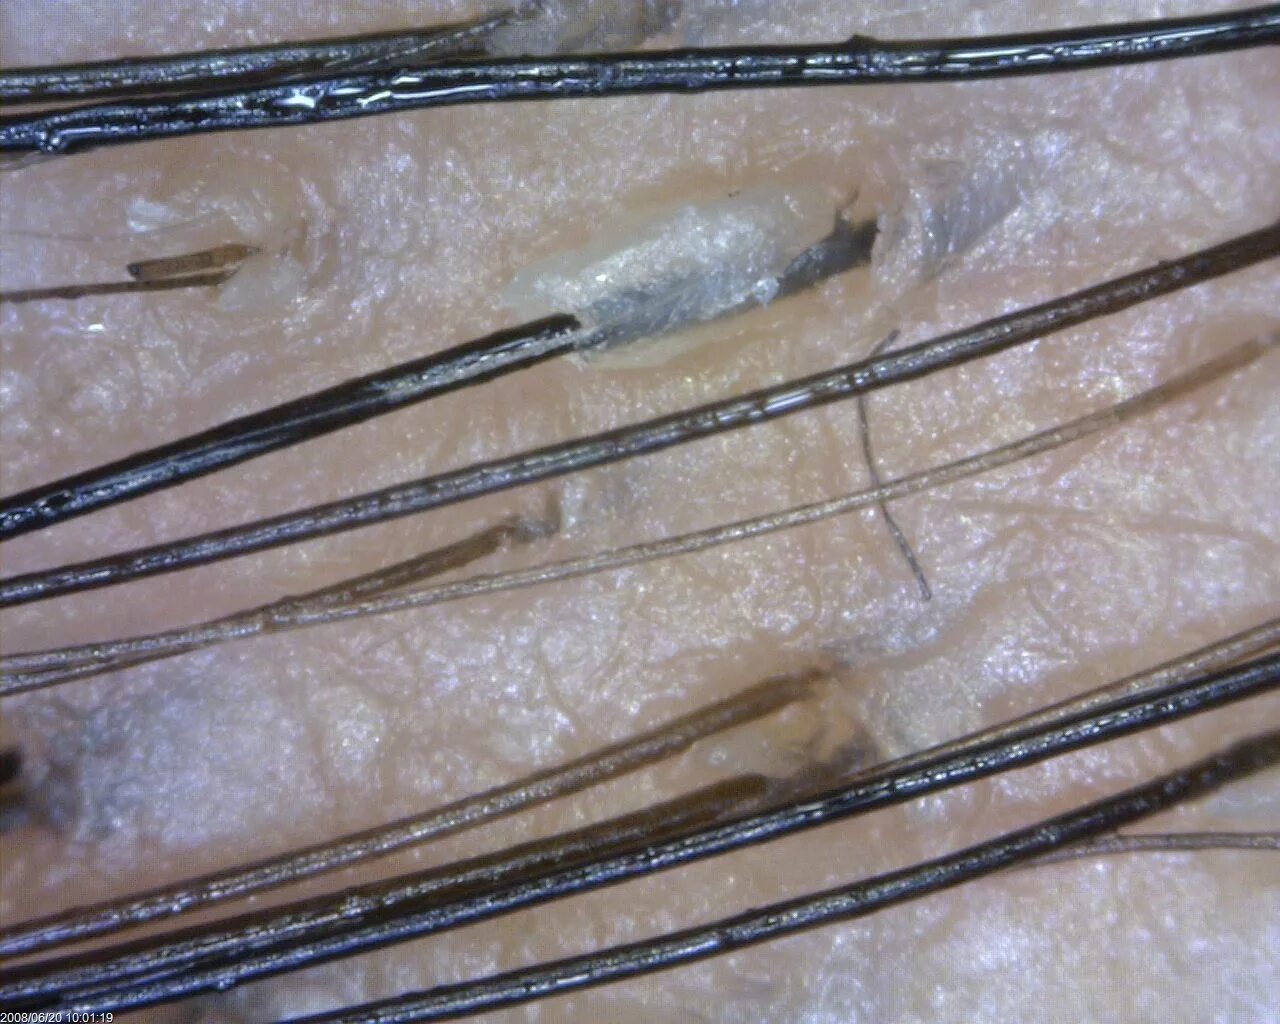 Корень луковица волоса. Луковица волоса под микроскопом. Волосяная луковица под микроскопом. Корень волоса под микроскопом.